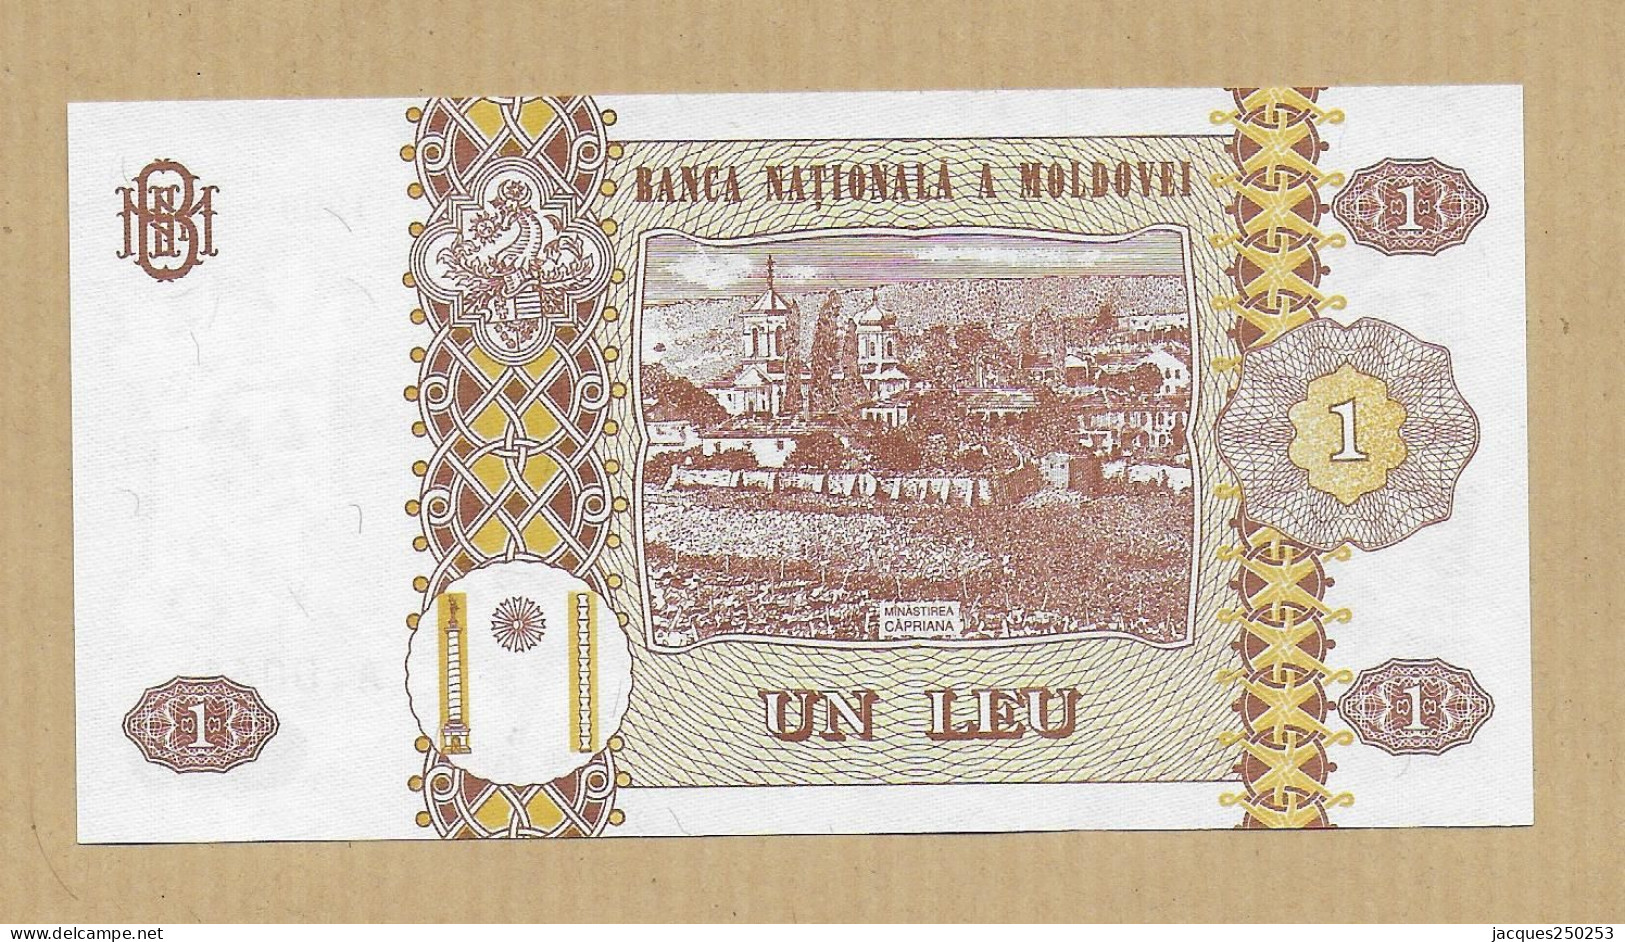 1 LEU 1999 NEUF - Moldova